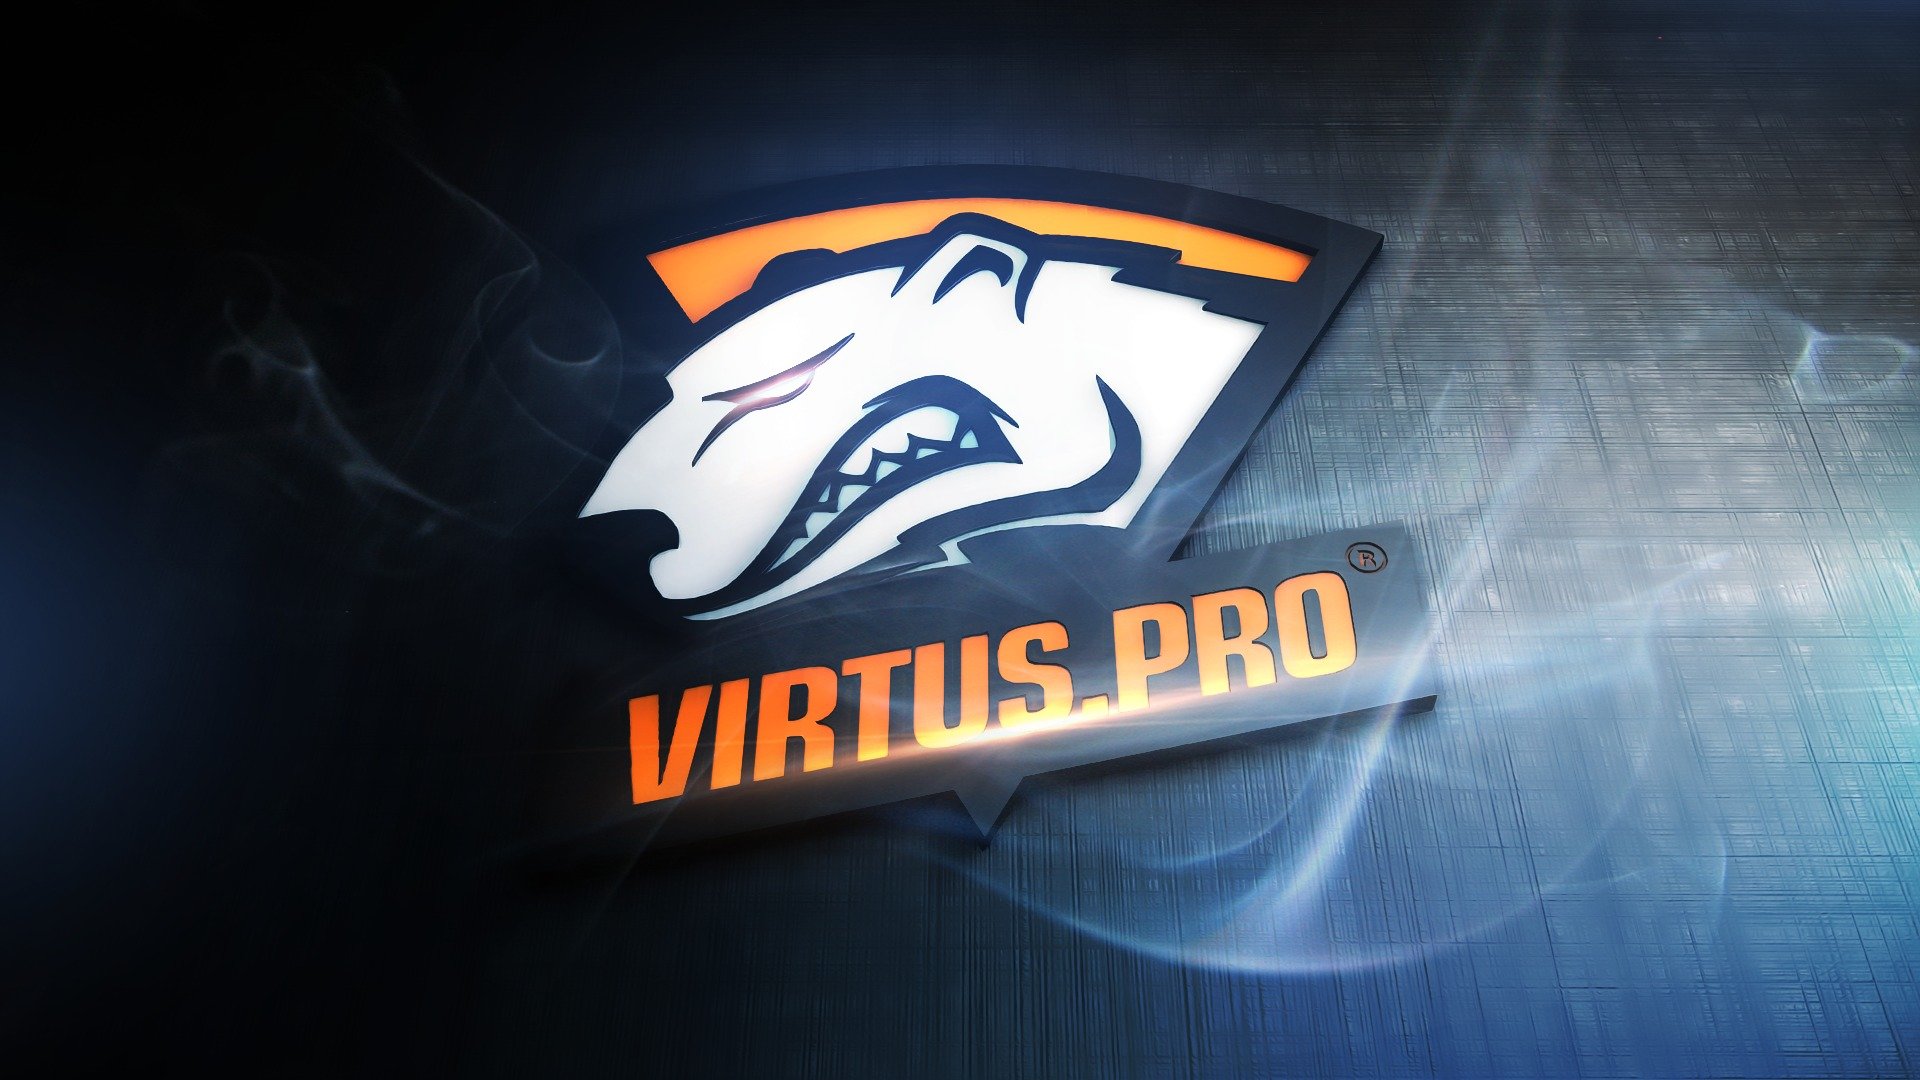 Team Virtus Pro Cs Go Wallpaper Background